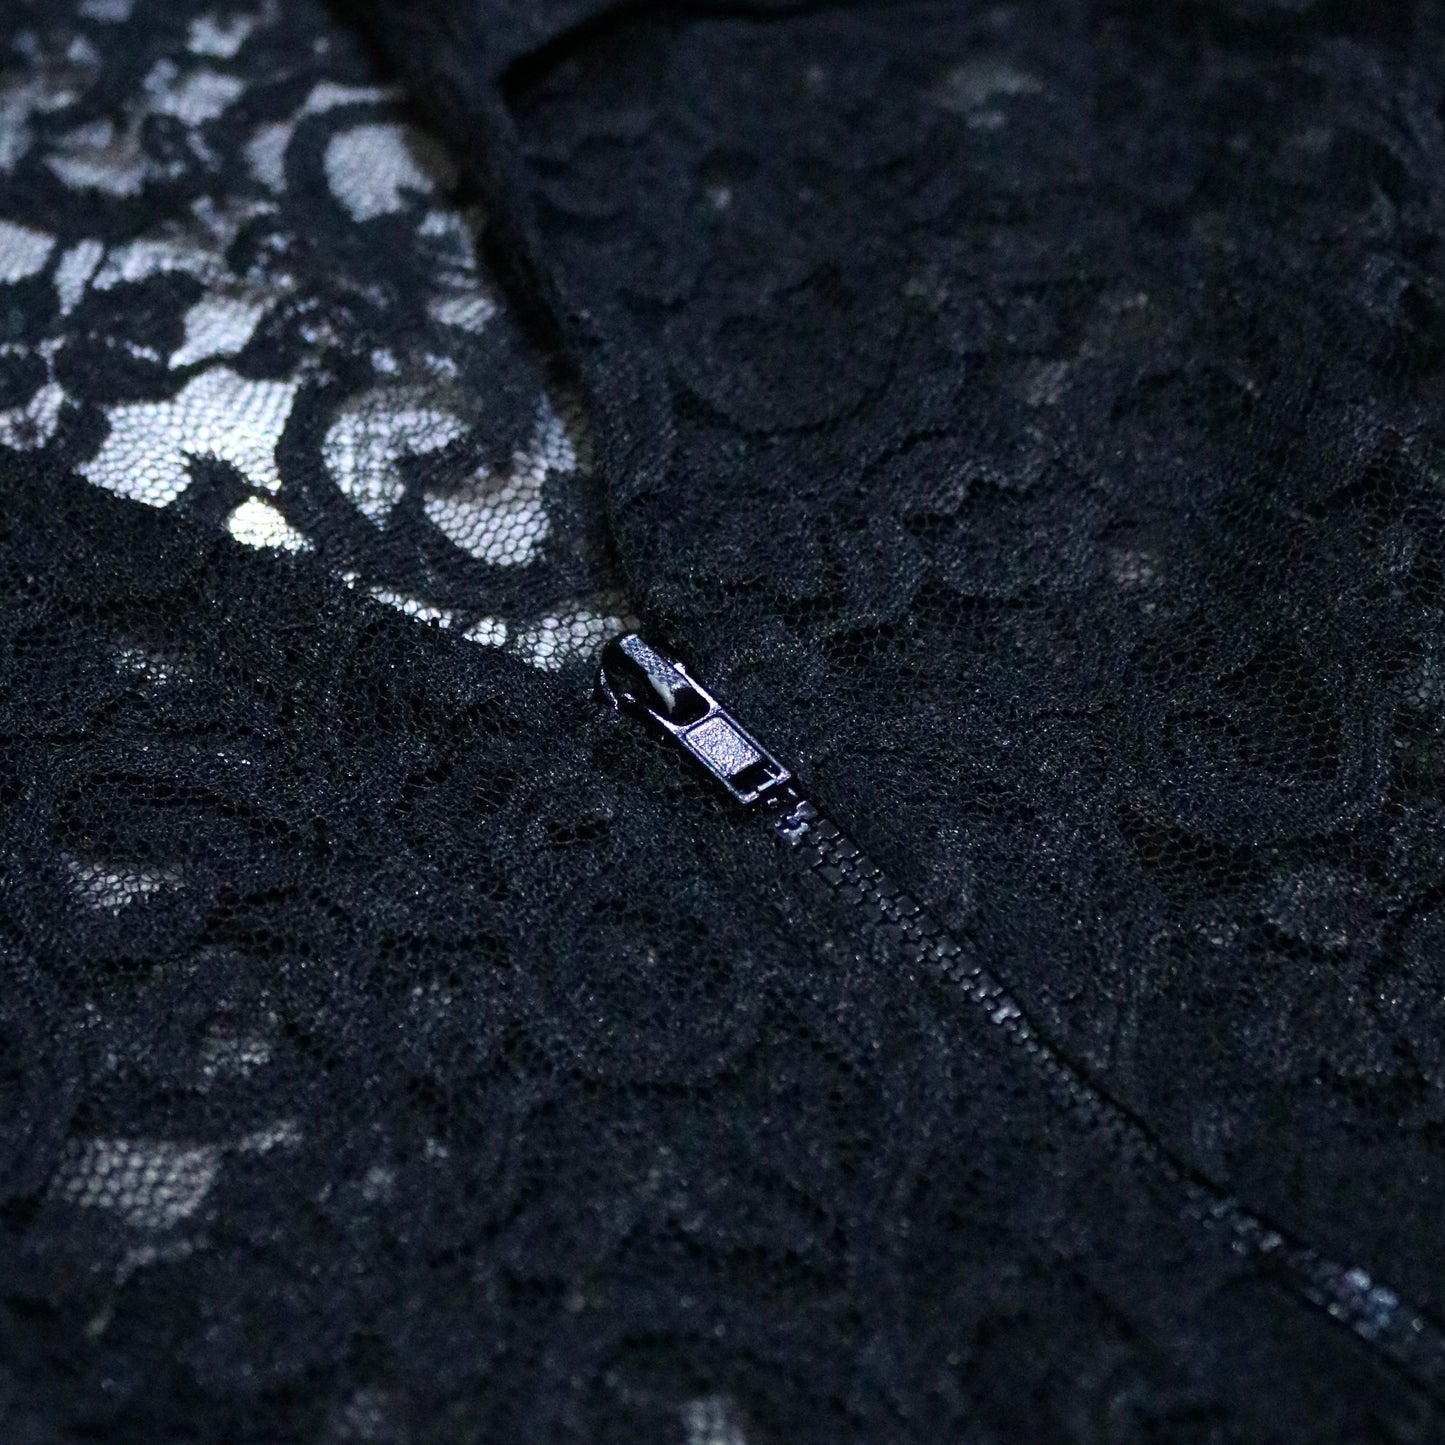 Lace fabric zip up shirt